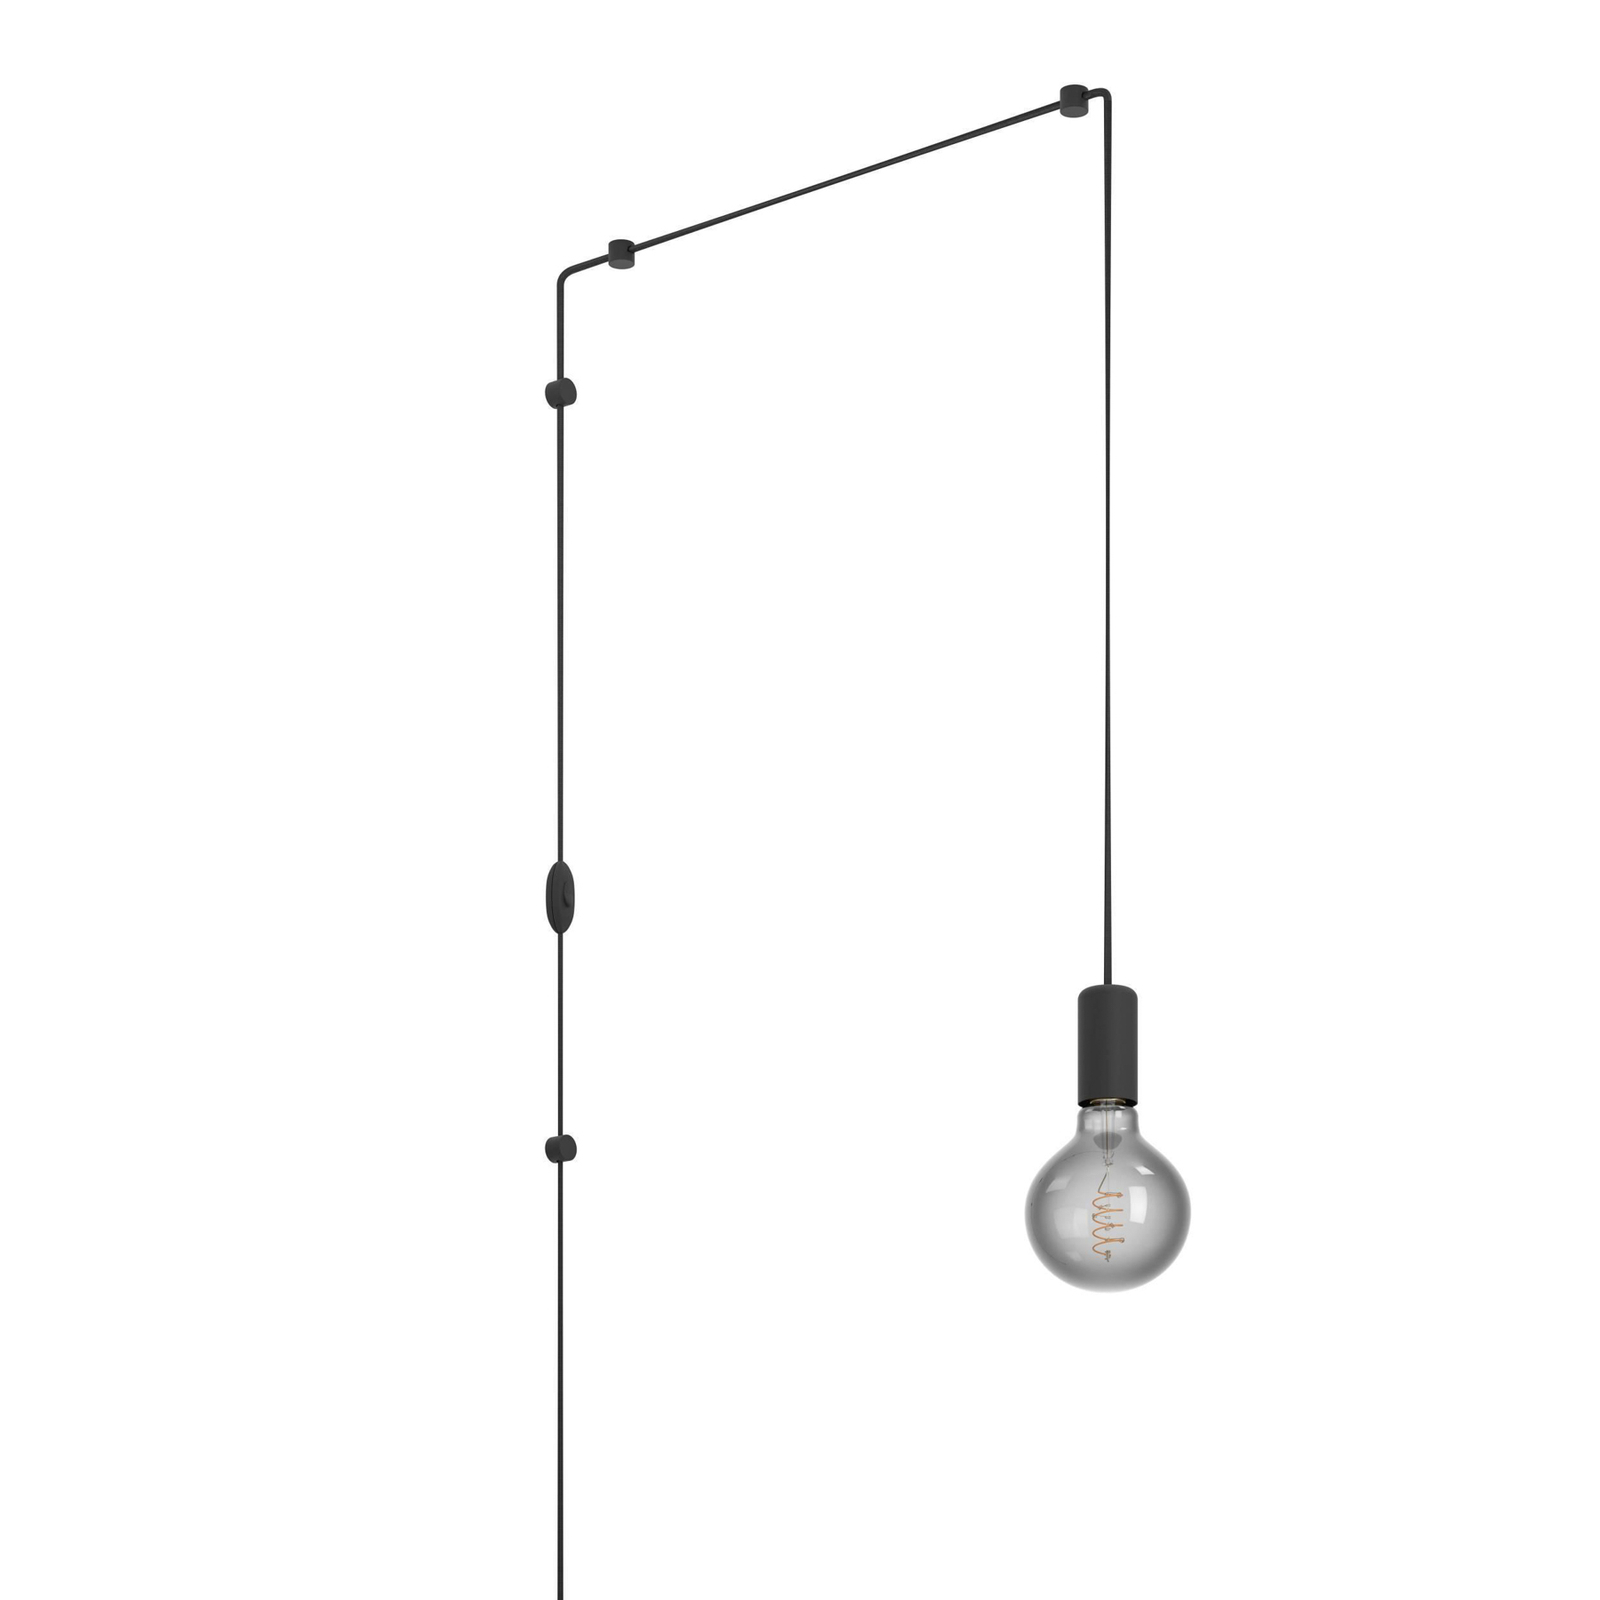 Pinetina pendant light, 40 cm projection, black, plug